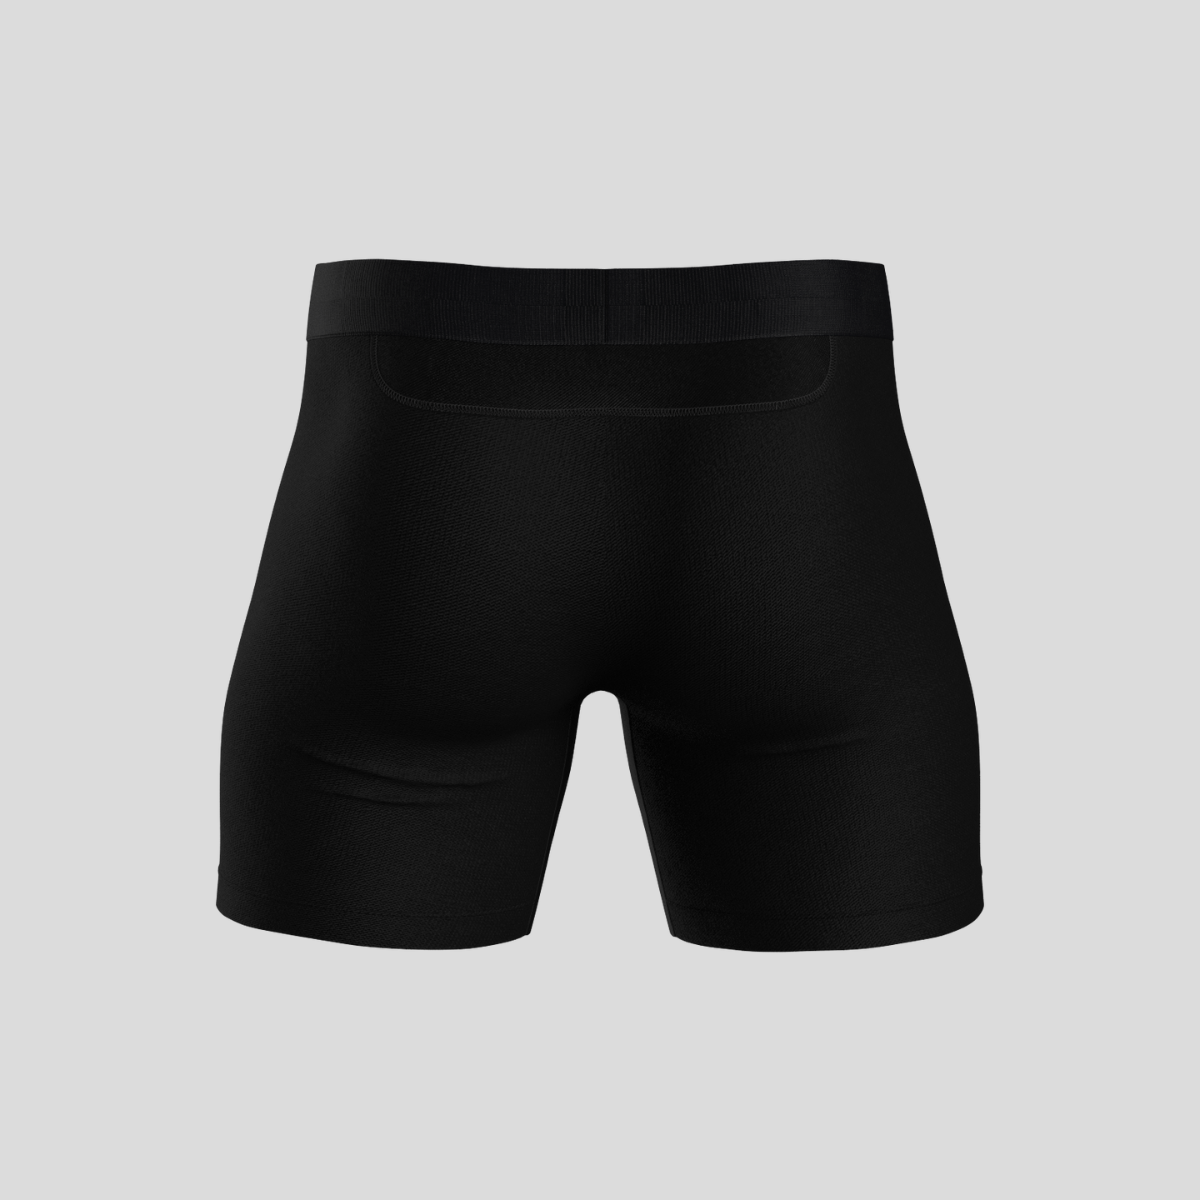 Black Bamboo Boxer Brief Underwear for Men